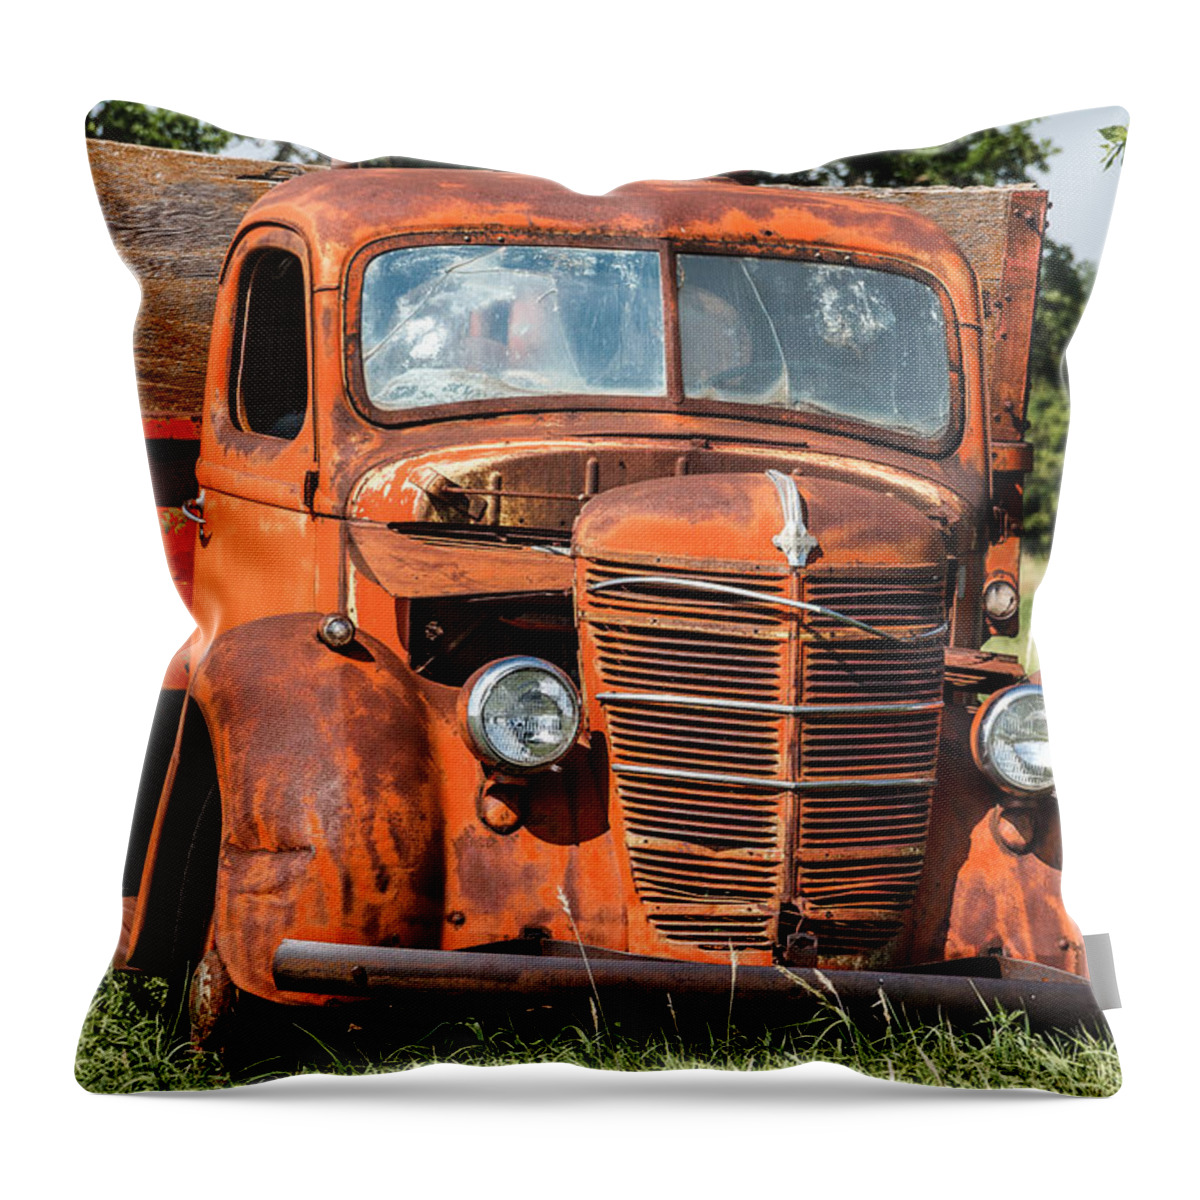 Steven Bateson Throw Pillow featuring the photograph Big Red International Truck by Steven Bateson